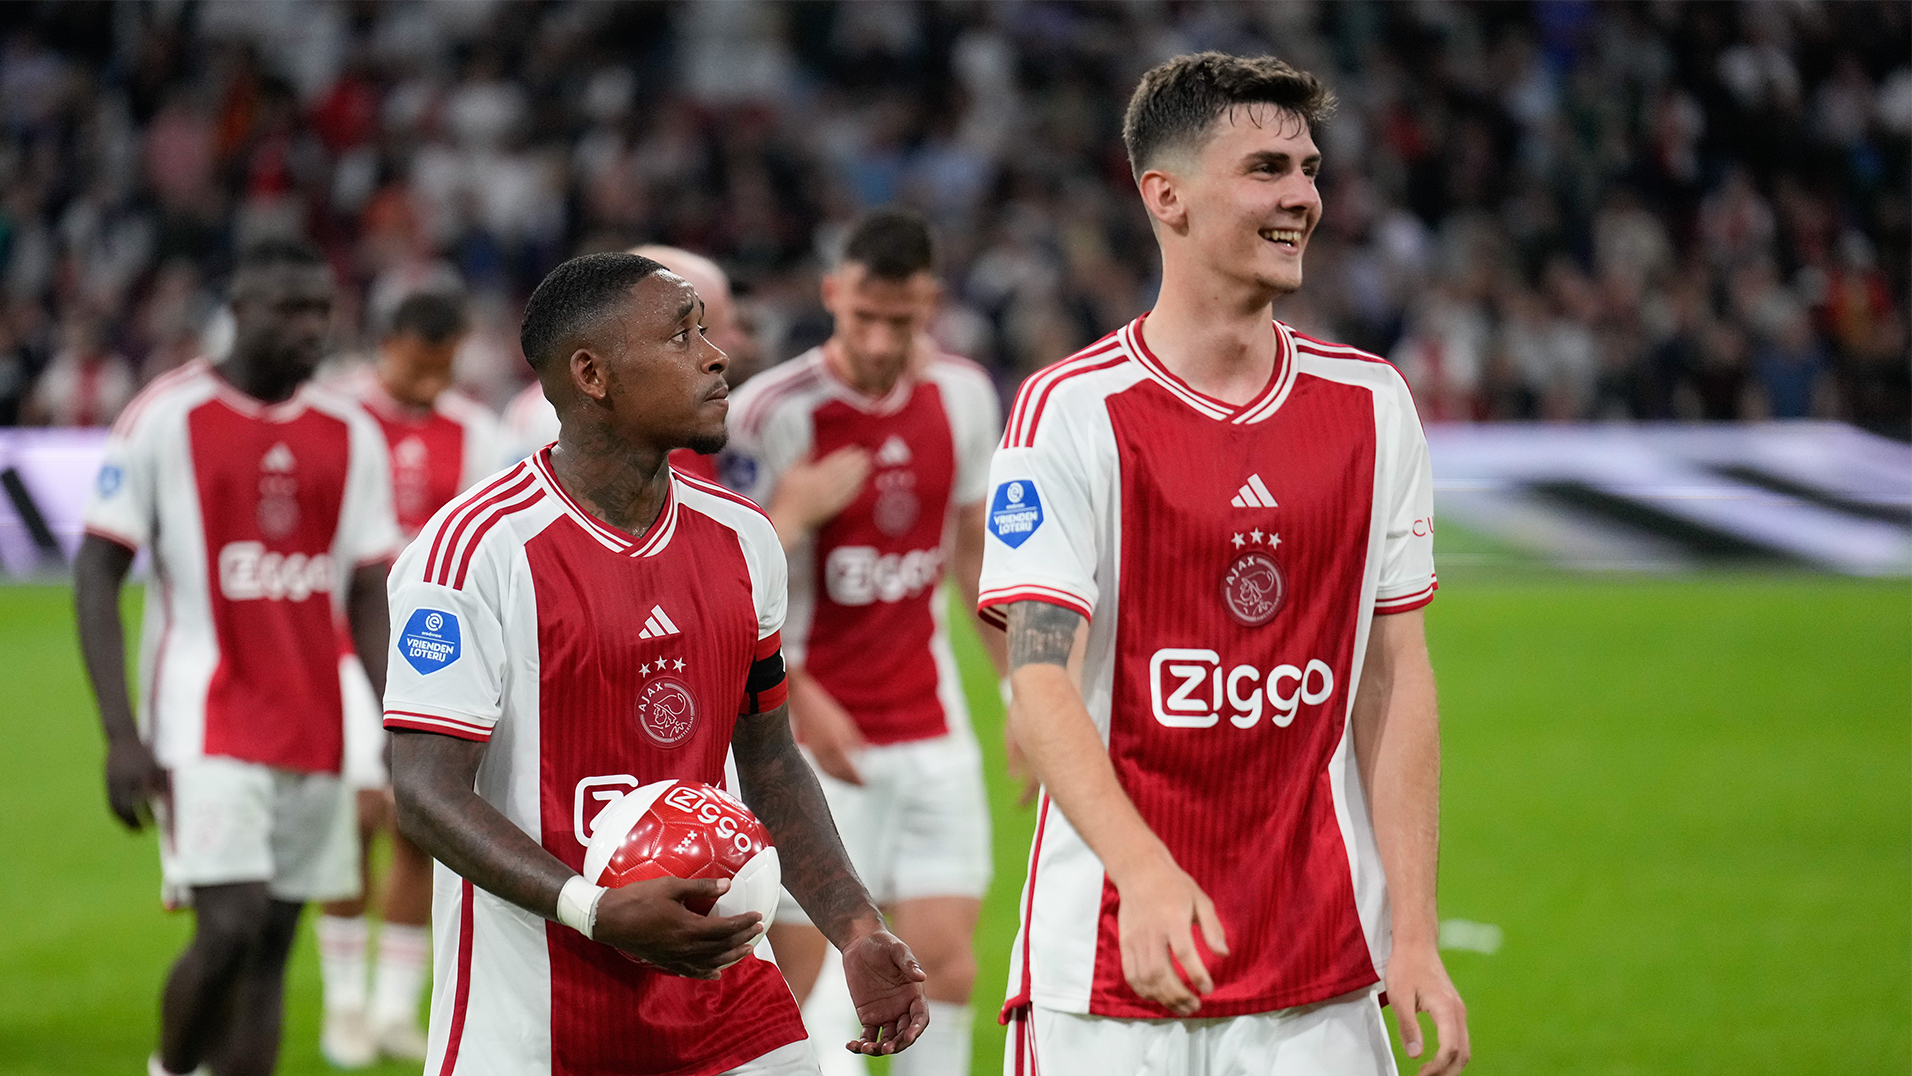 Official website AFC Ajax Amsterdam - Ajax.nl